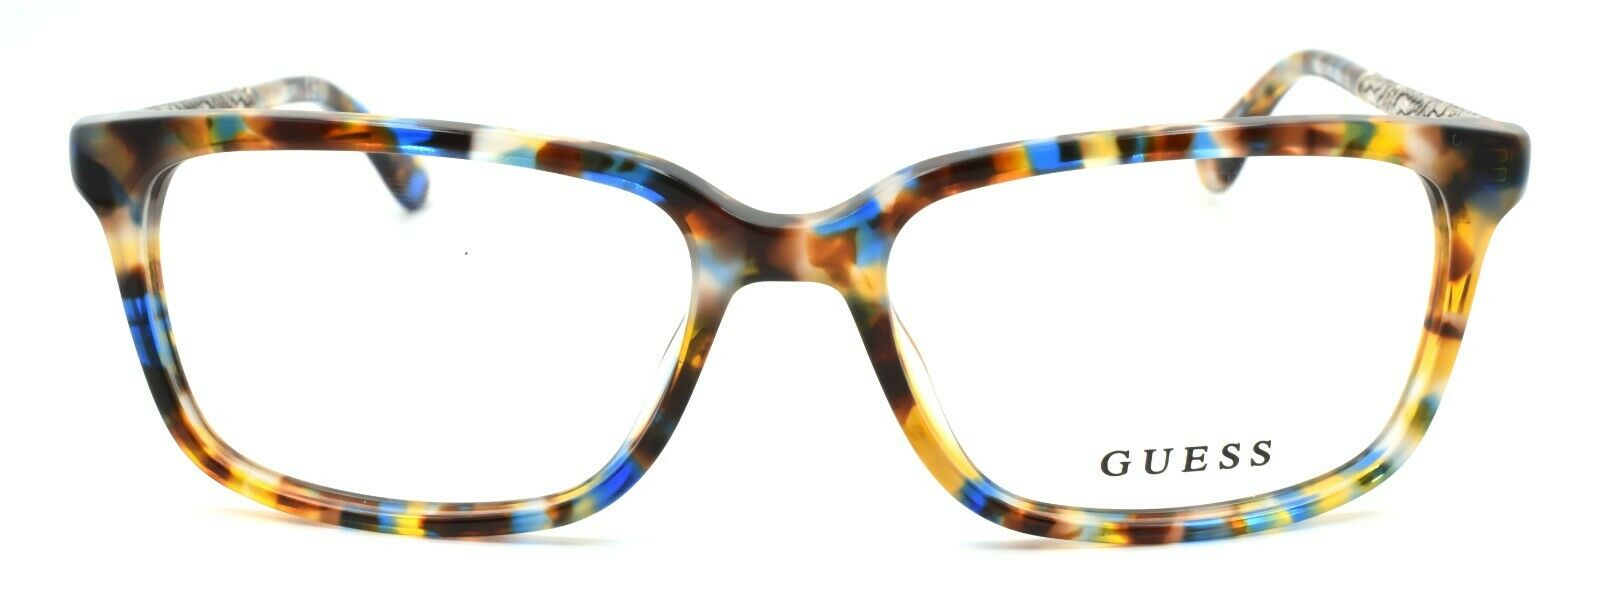 2-GUESS GU2612 092 Women's Eyeglasses Frames 53-16-135 Blue / Multicolor + CASE-664689876433-IKSpecs